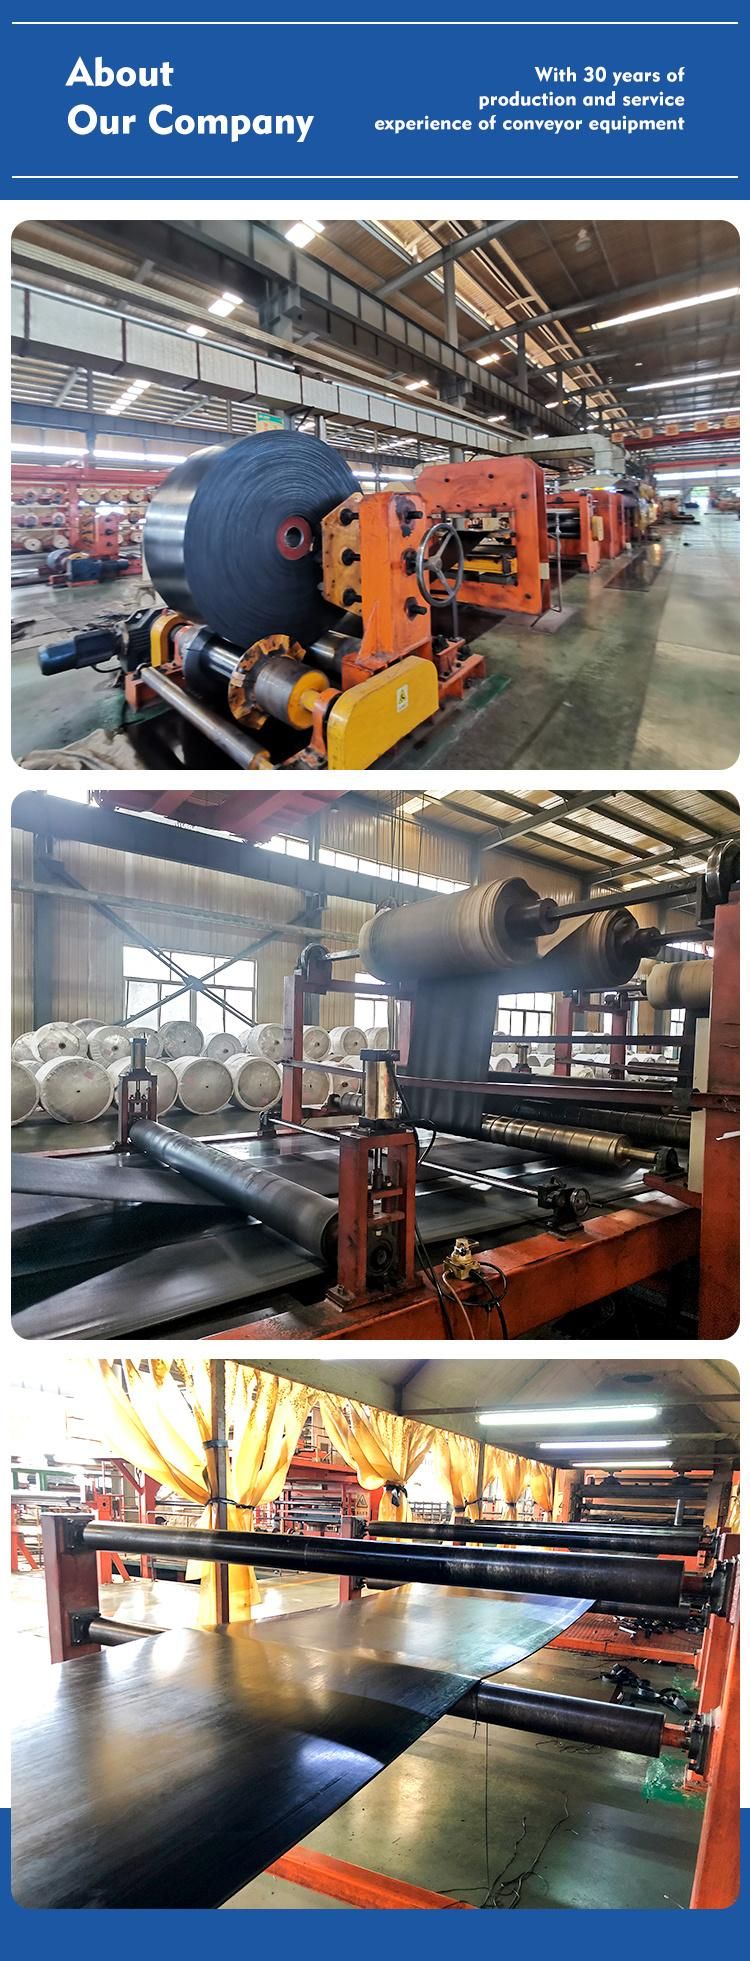 Styrene Butadiene Rubber and EPDM Rubber Heat Resistant Conveyor Belt for Steel